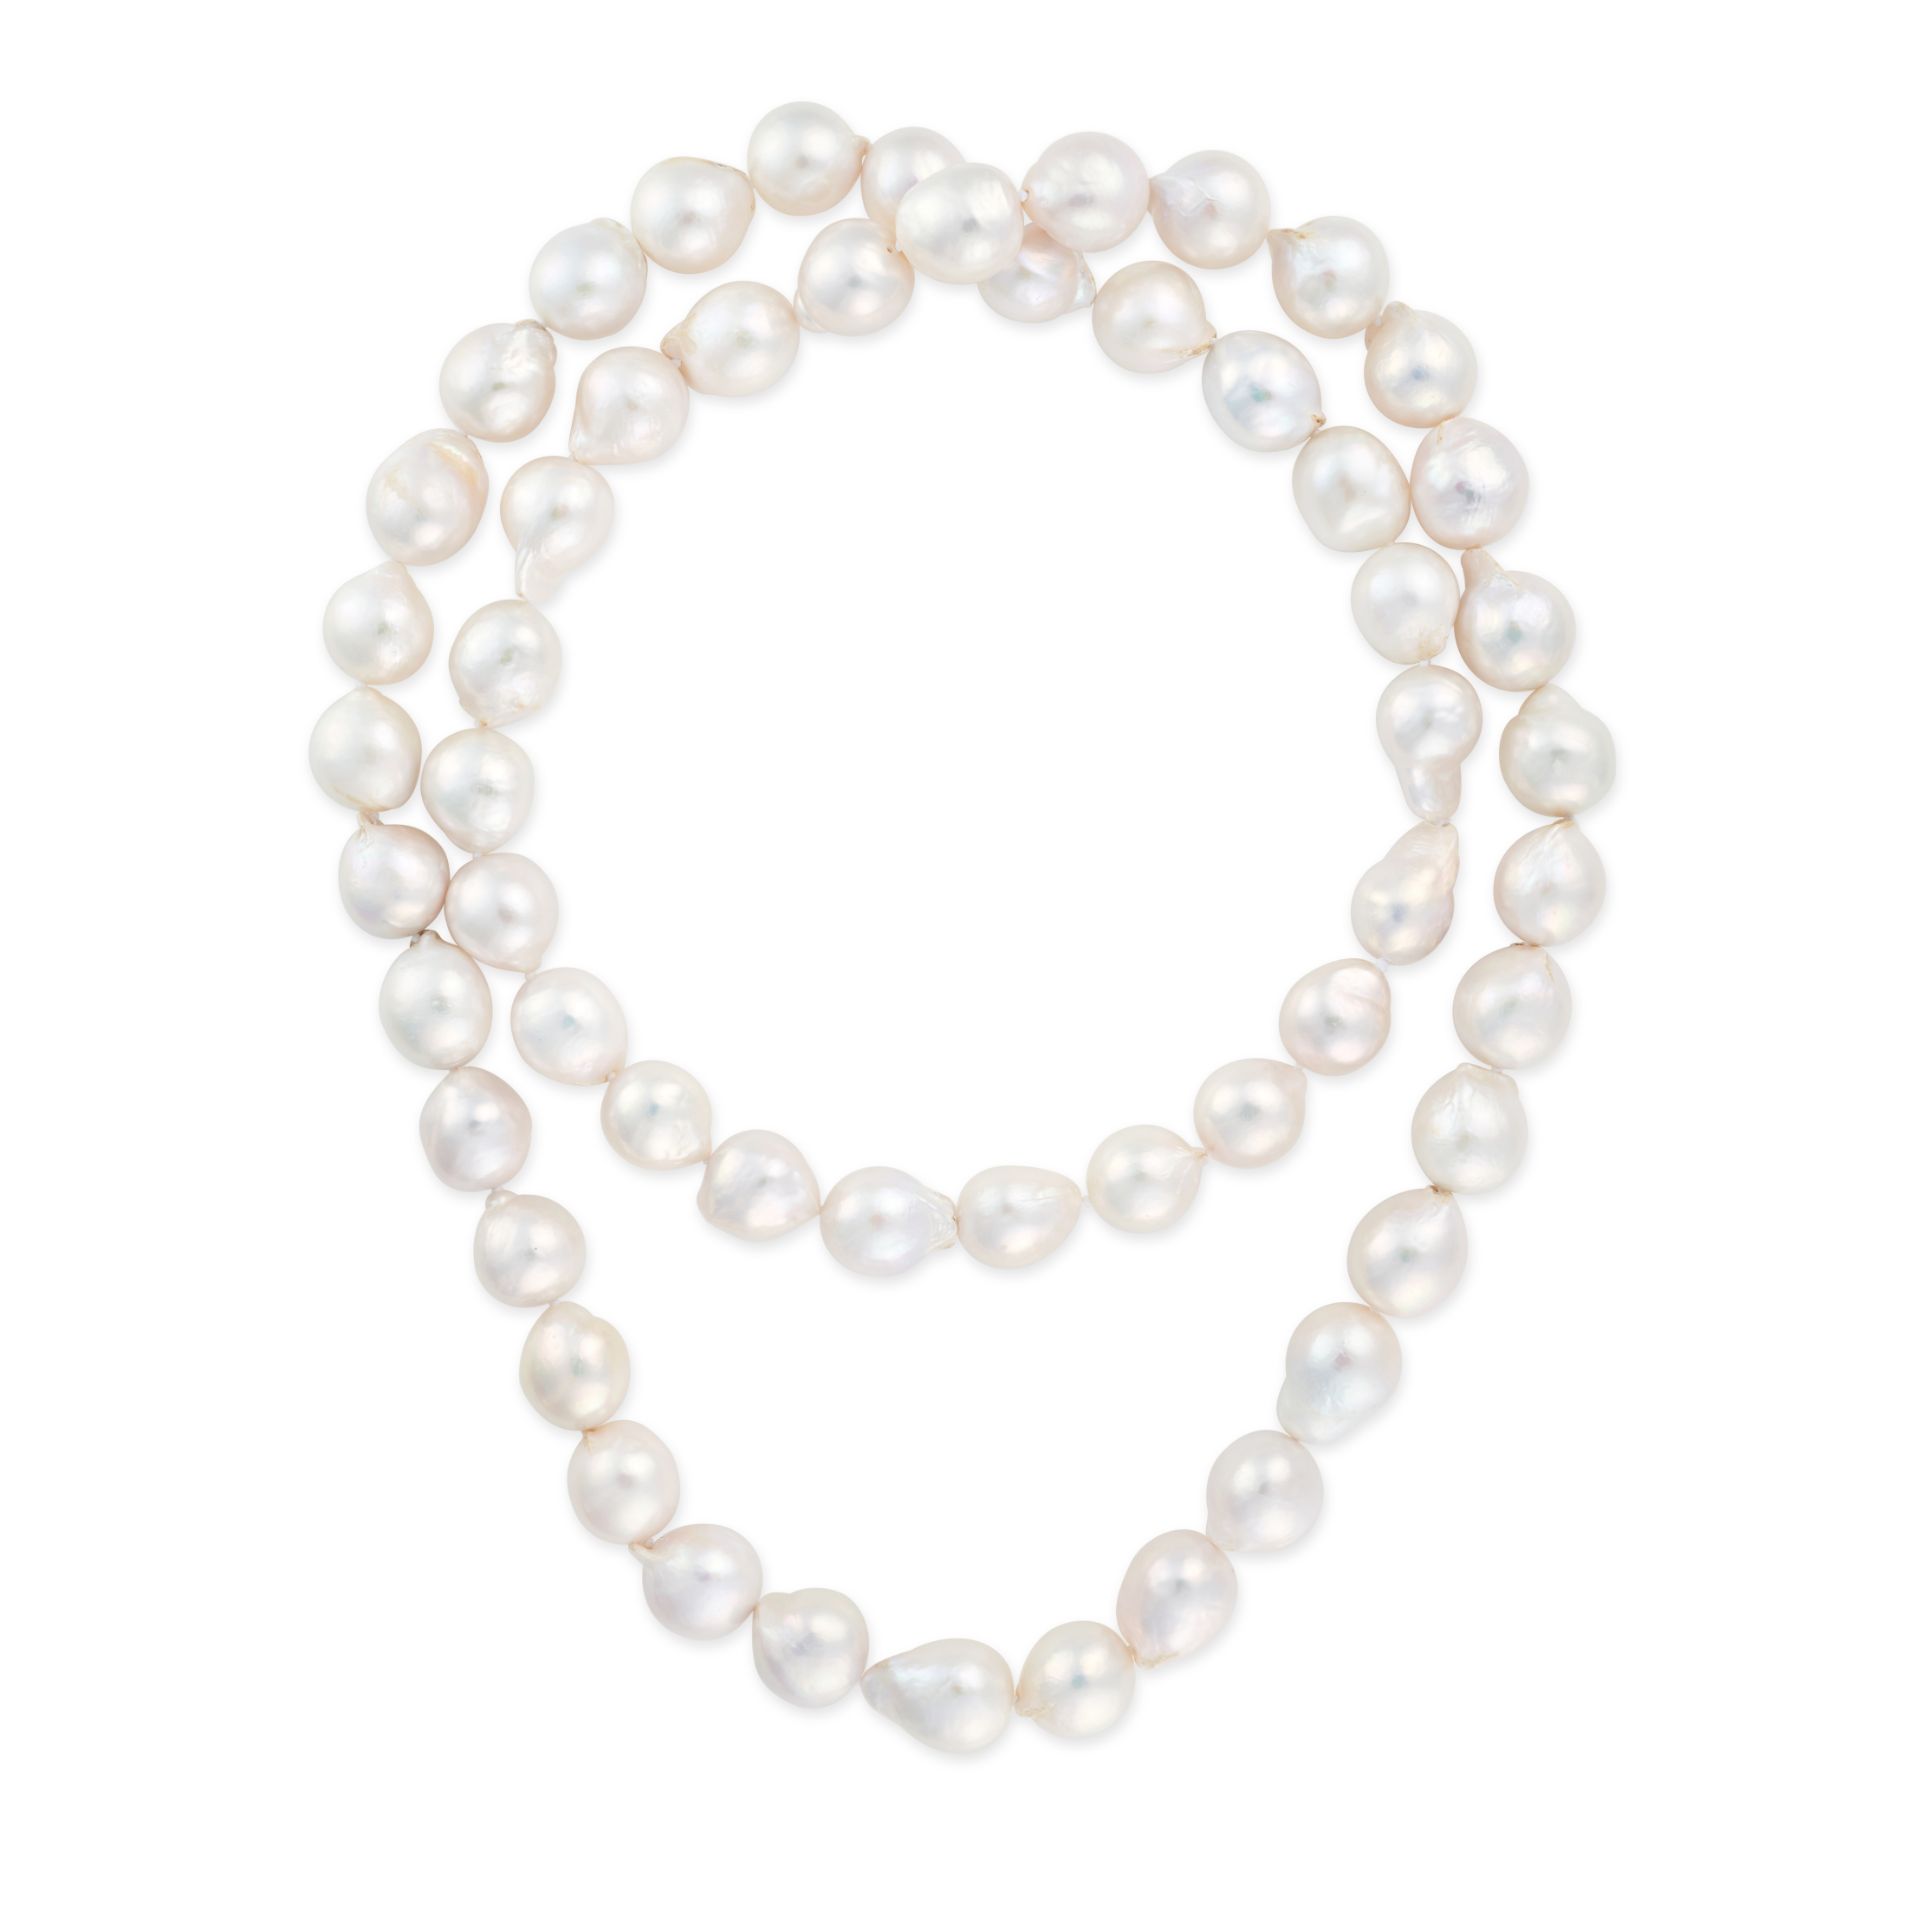 A BAROQUE PEARL SAUTOIR NECKLACE comprising a single row of baroque pearls, 80.0cm, 190.5g.